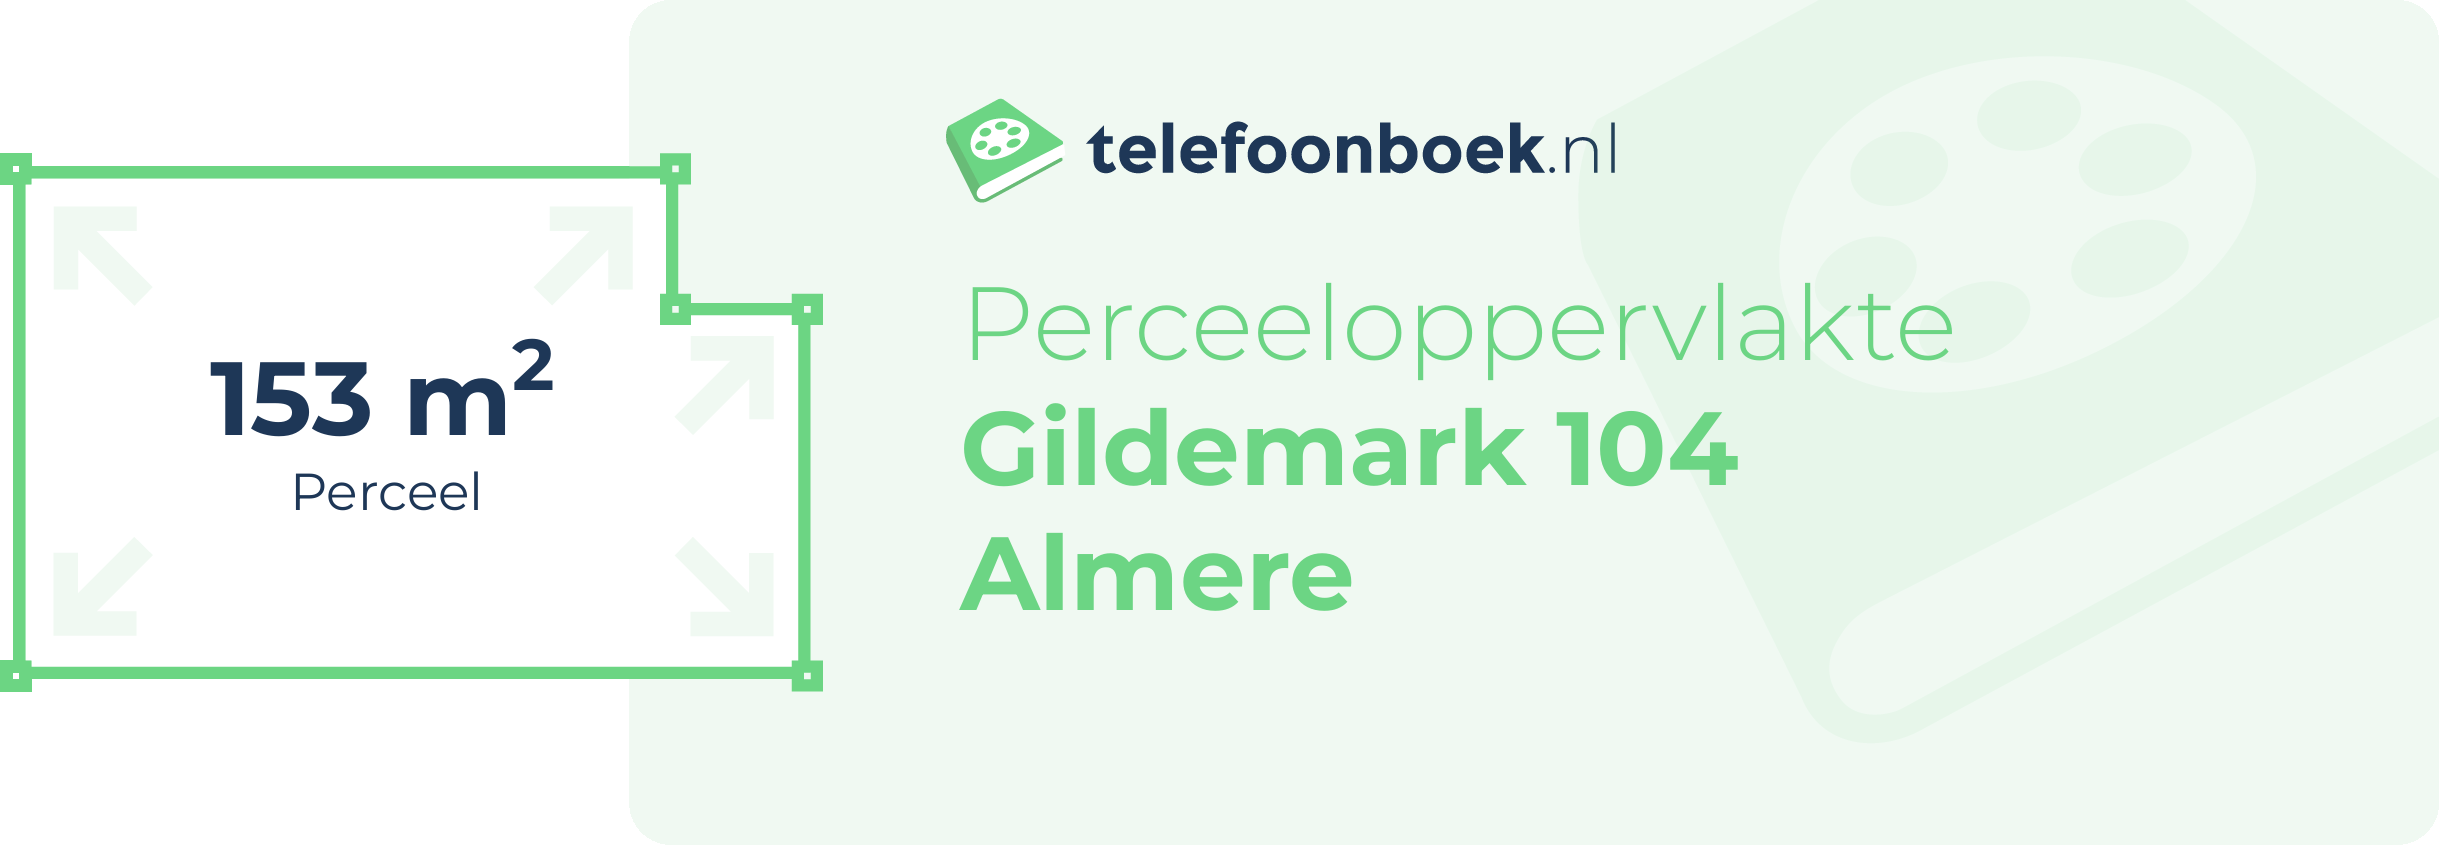 Perceeloppervlakte Gildemark 104 Almere